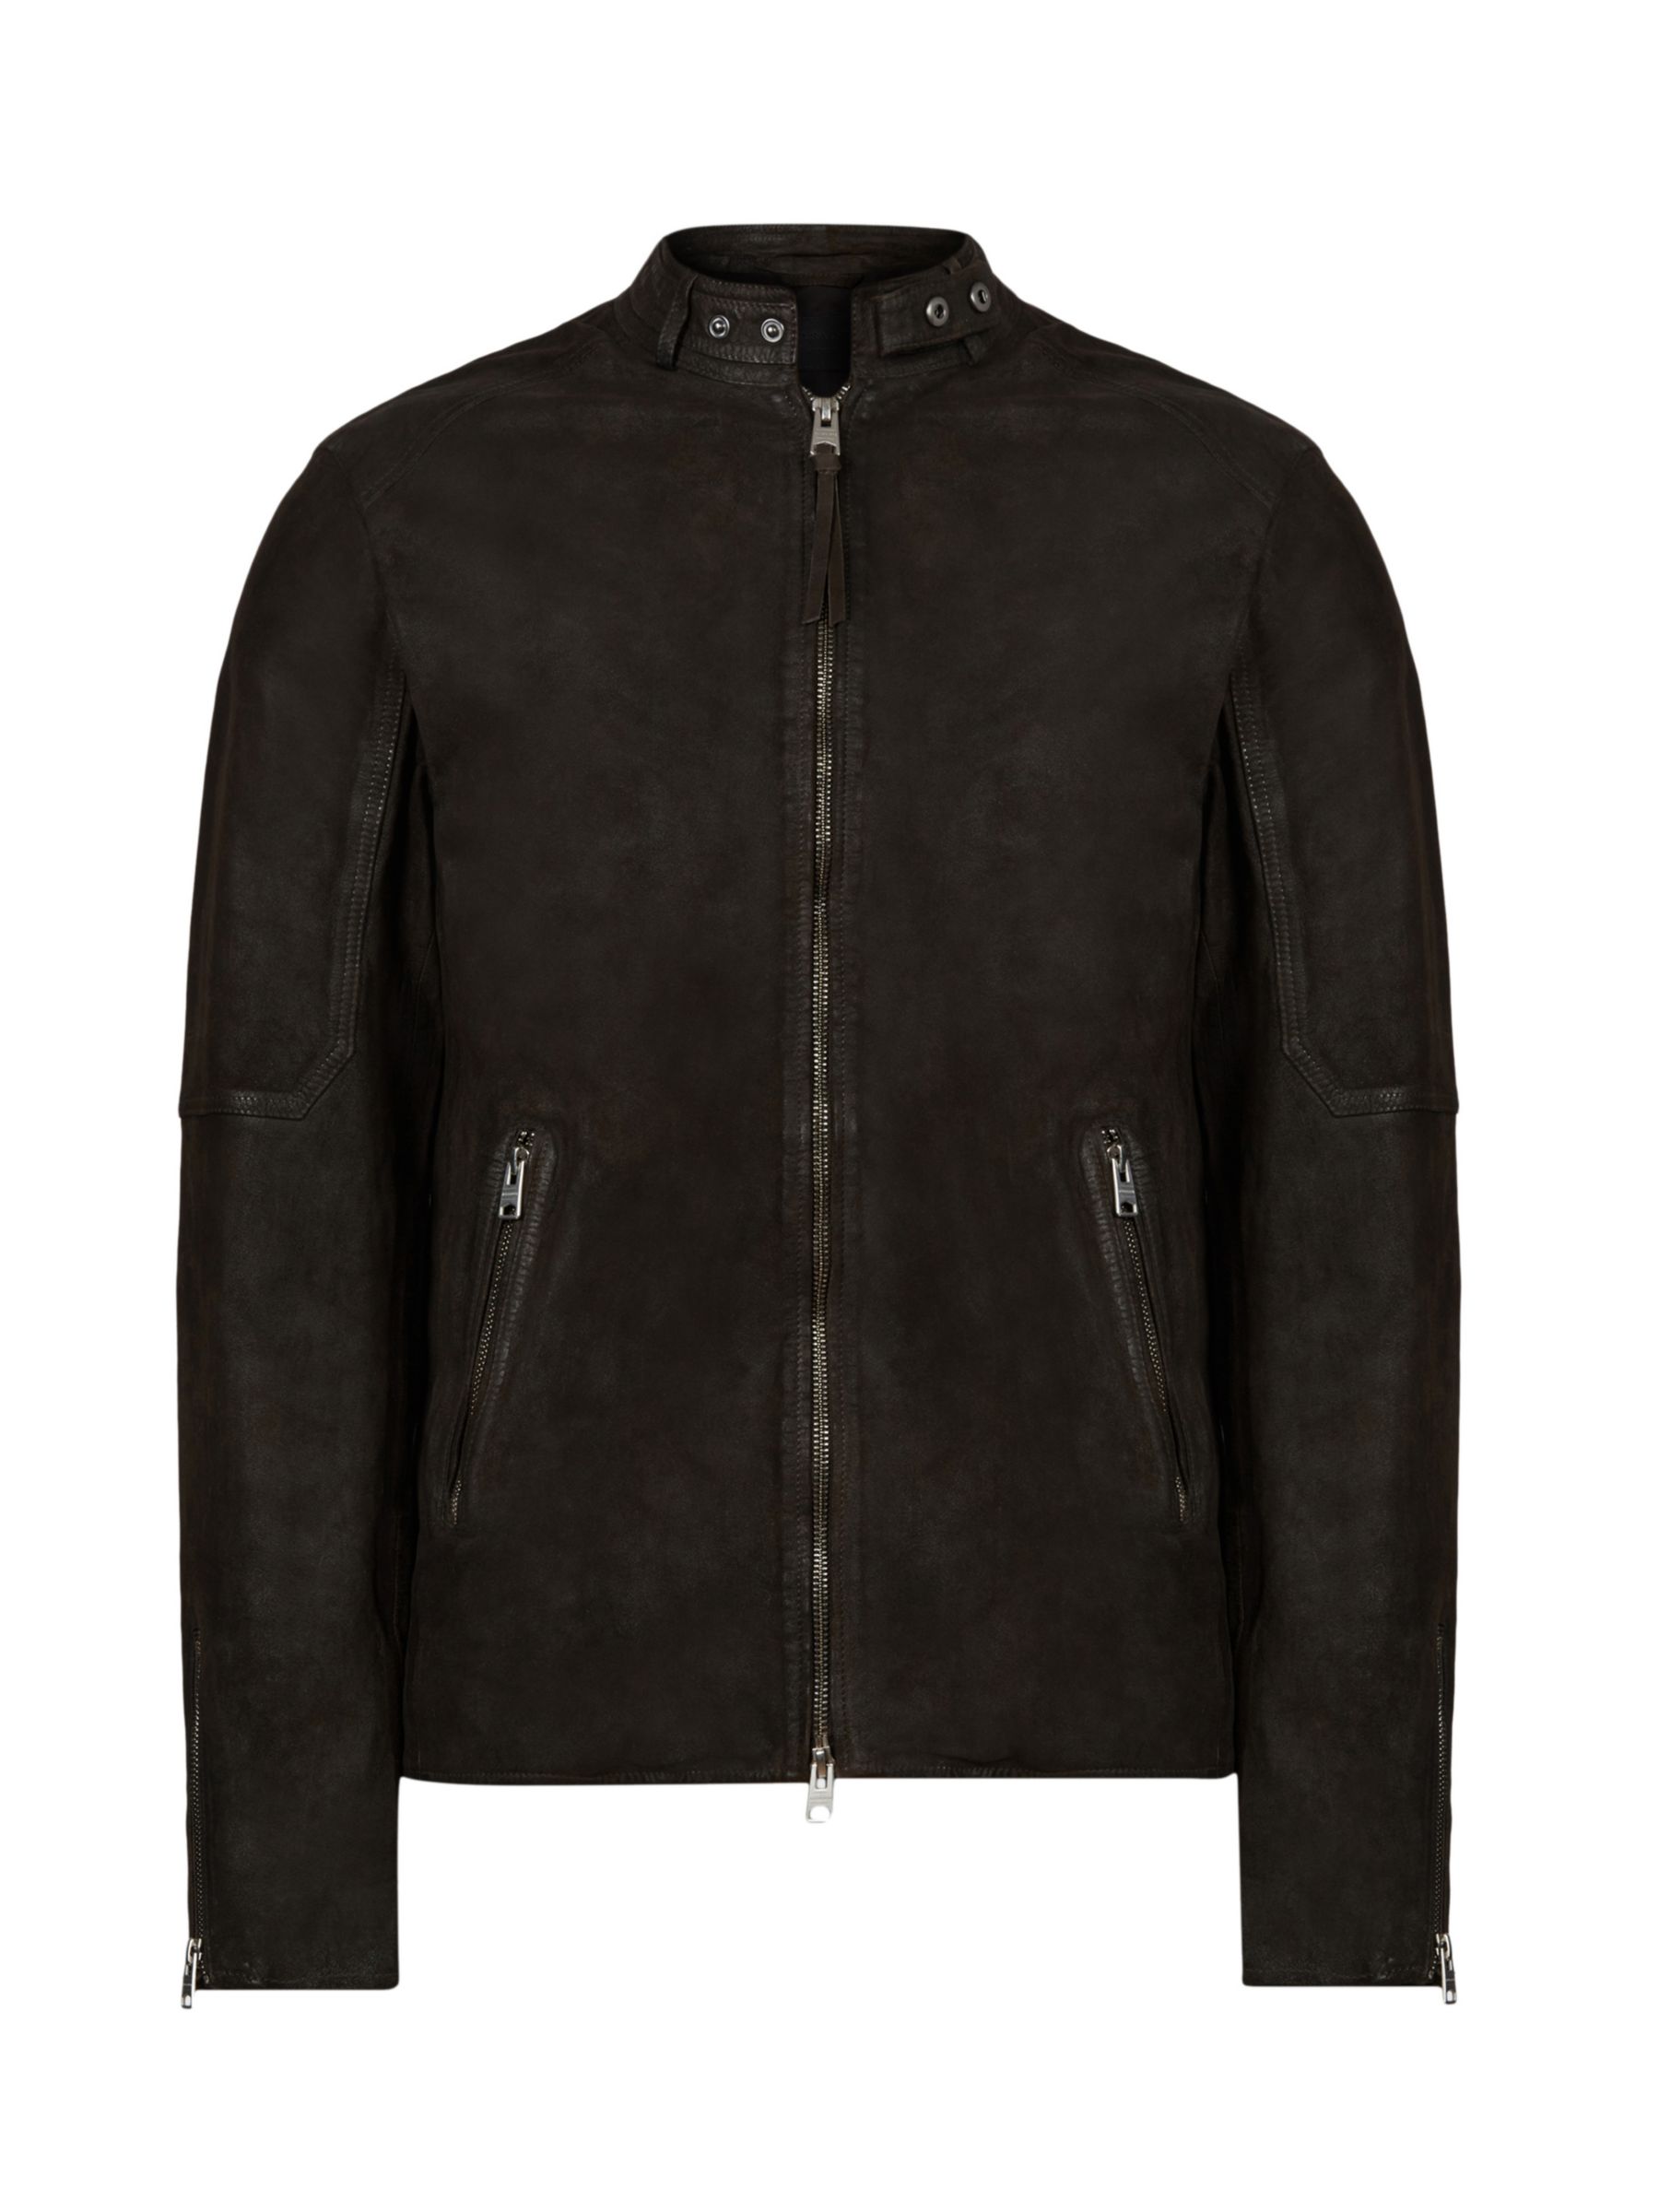 AllSaints Cora Leather Jacket, Anthracite Grey, XS